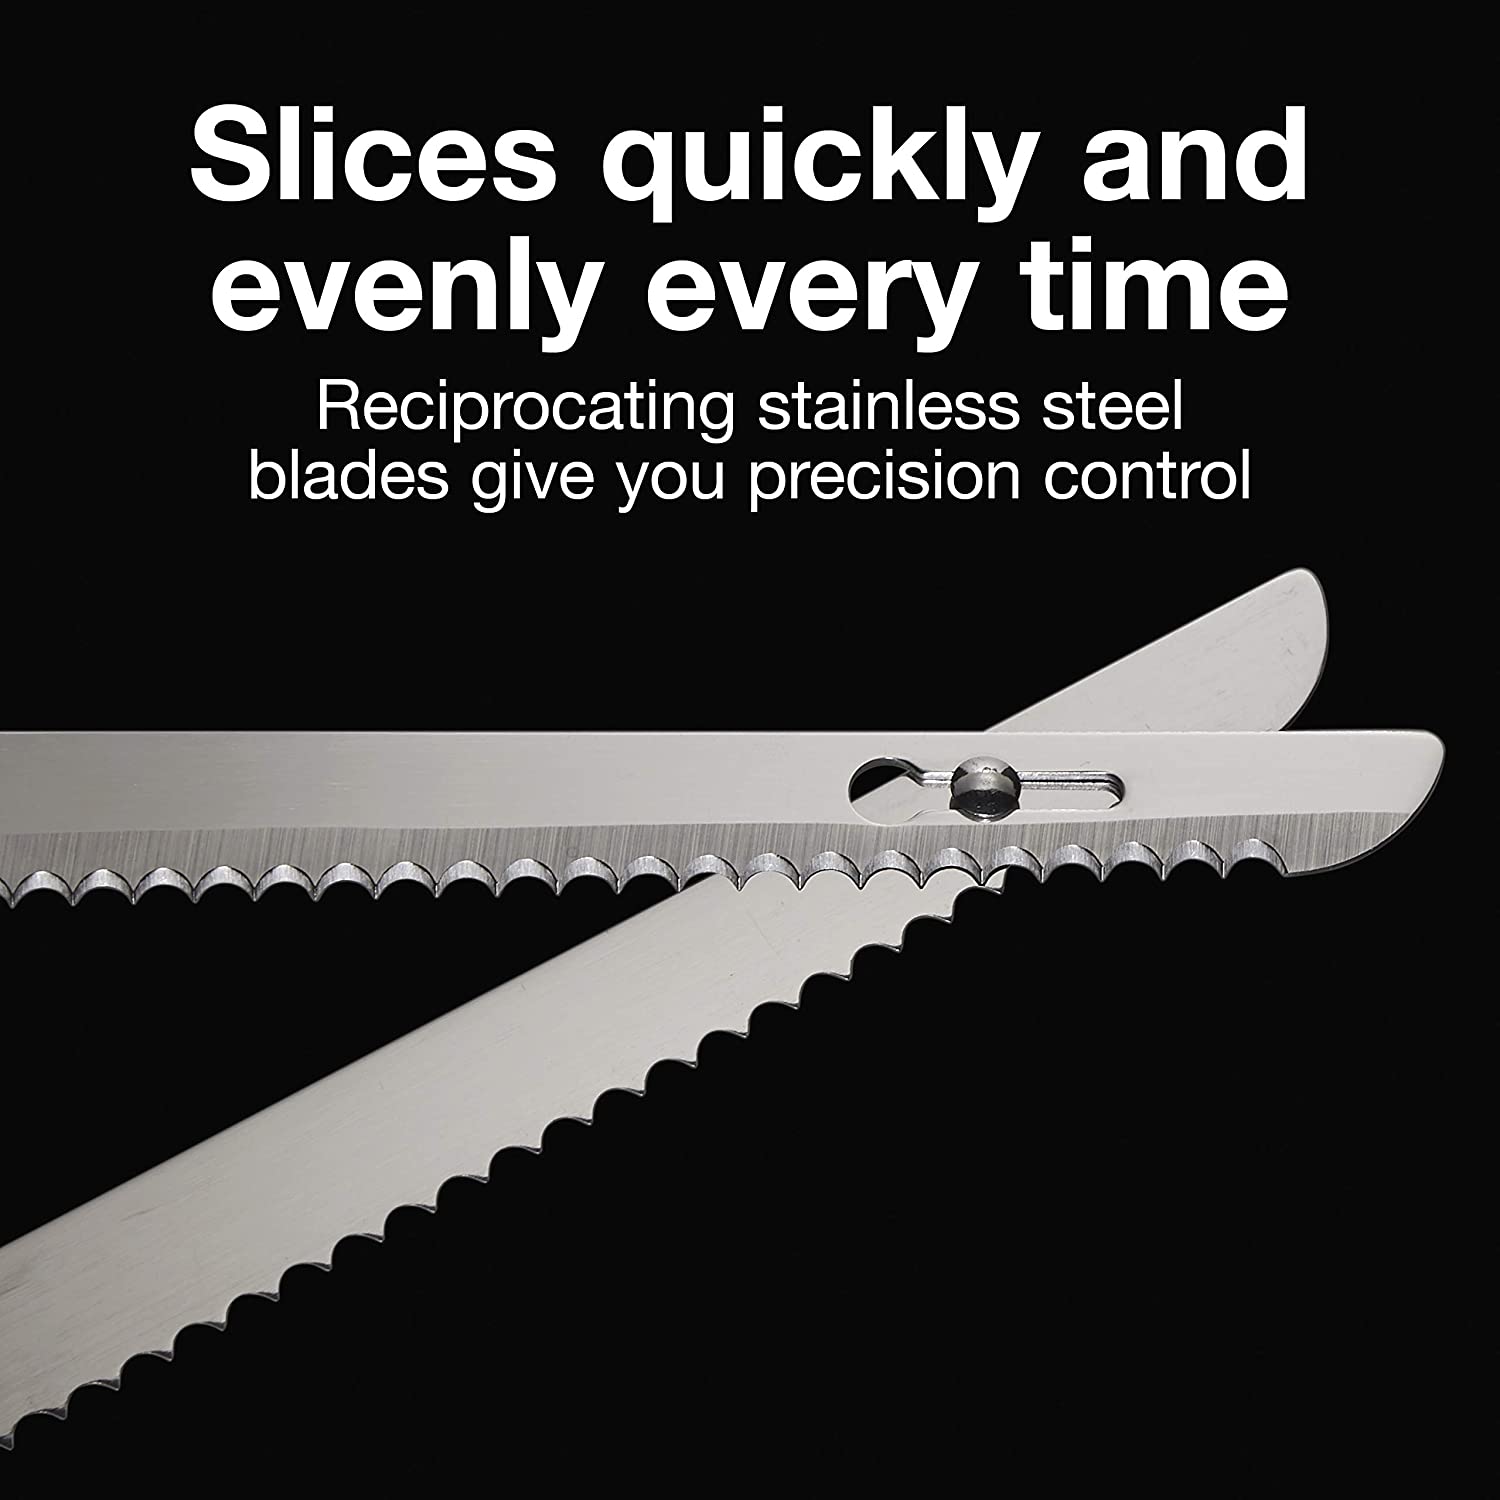 Proctor Silex Easy Slice Electric Knife